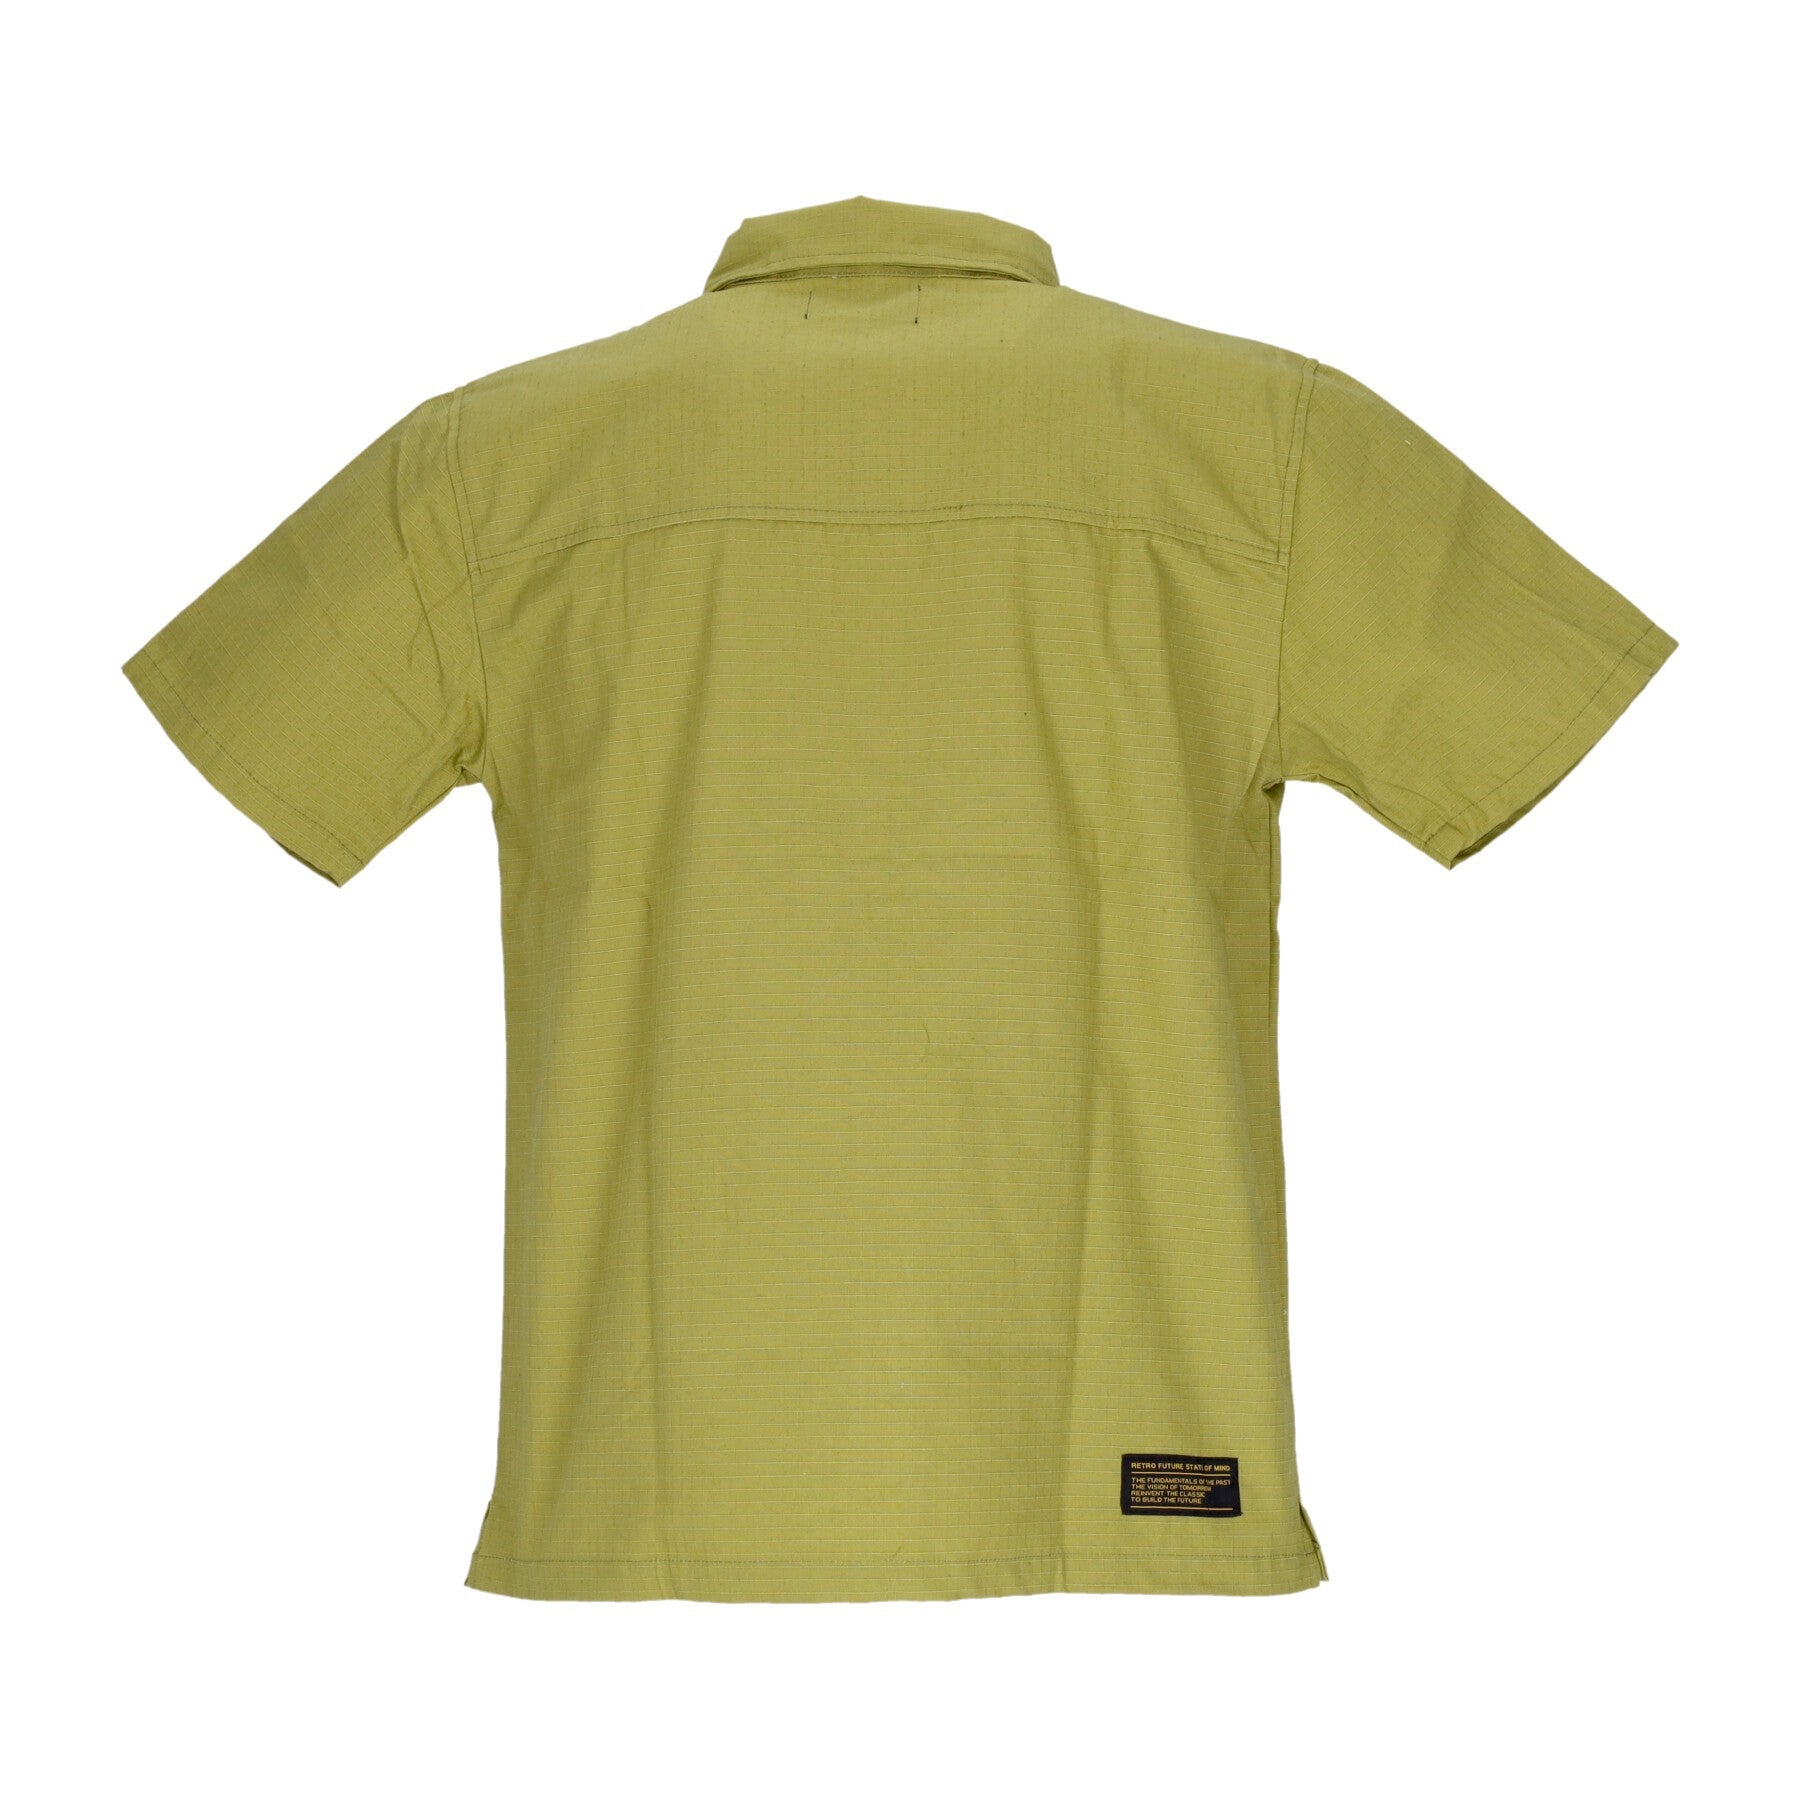 Men's Short Sleeve Shirt Retrofuture Shirt Military Green